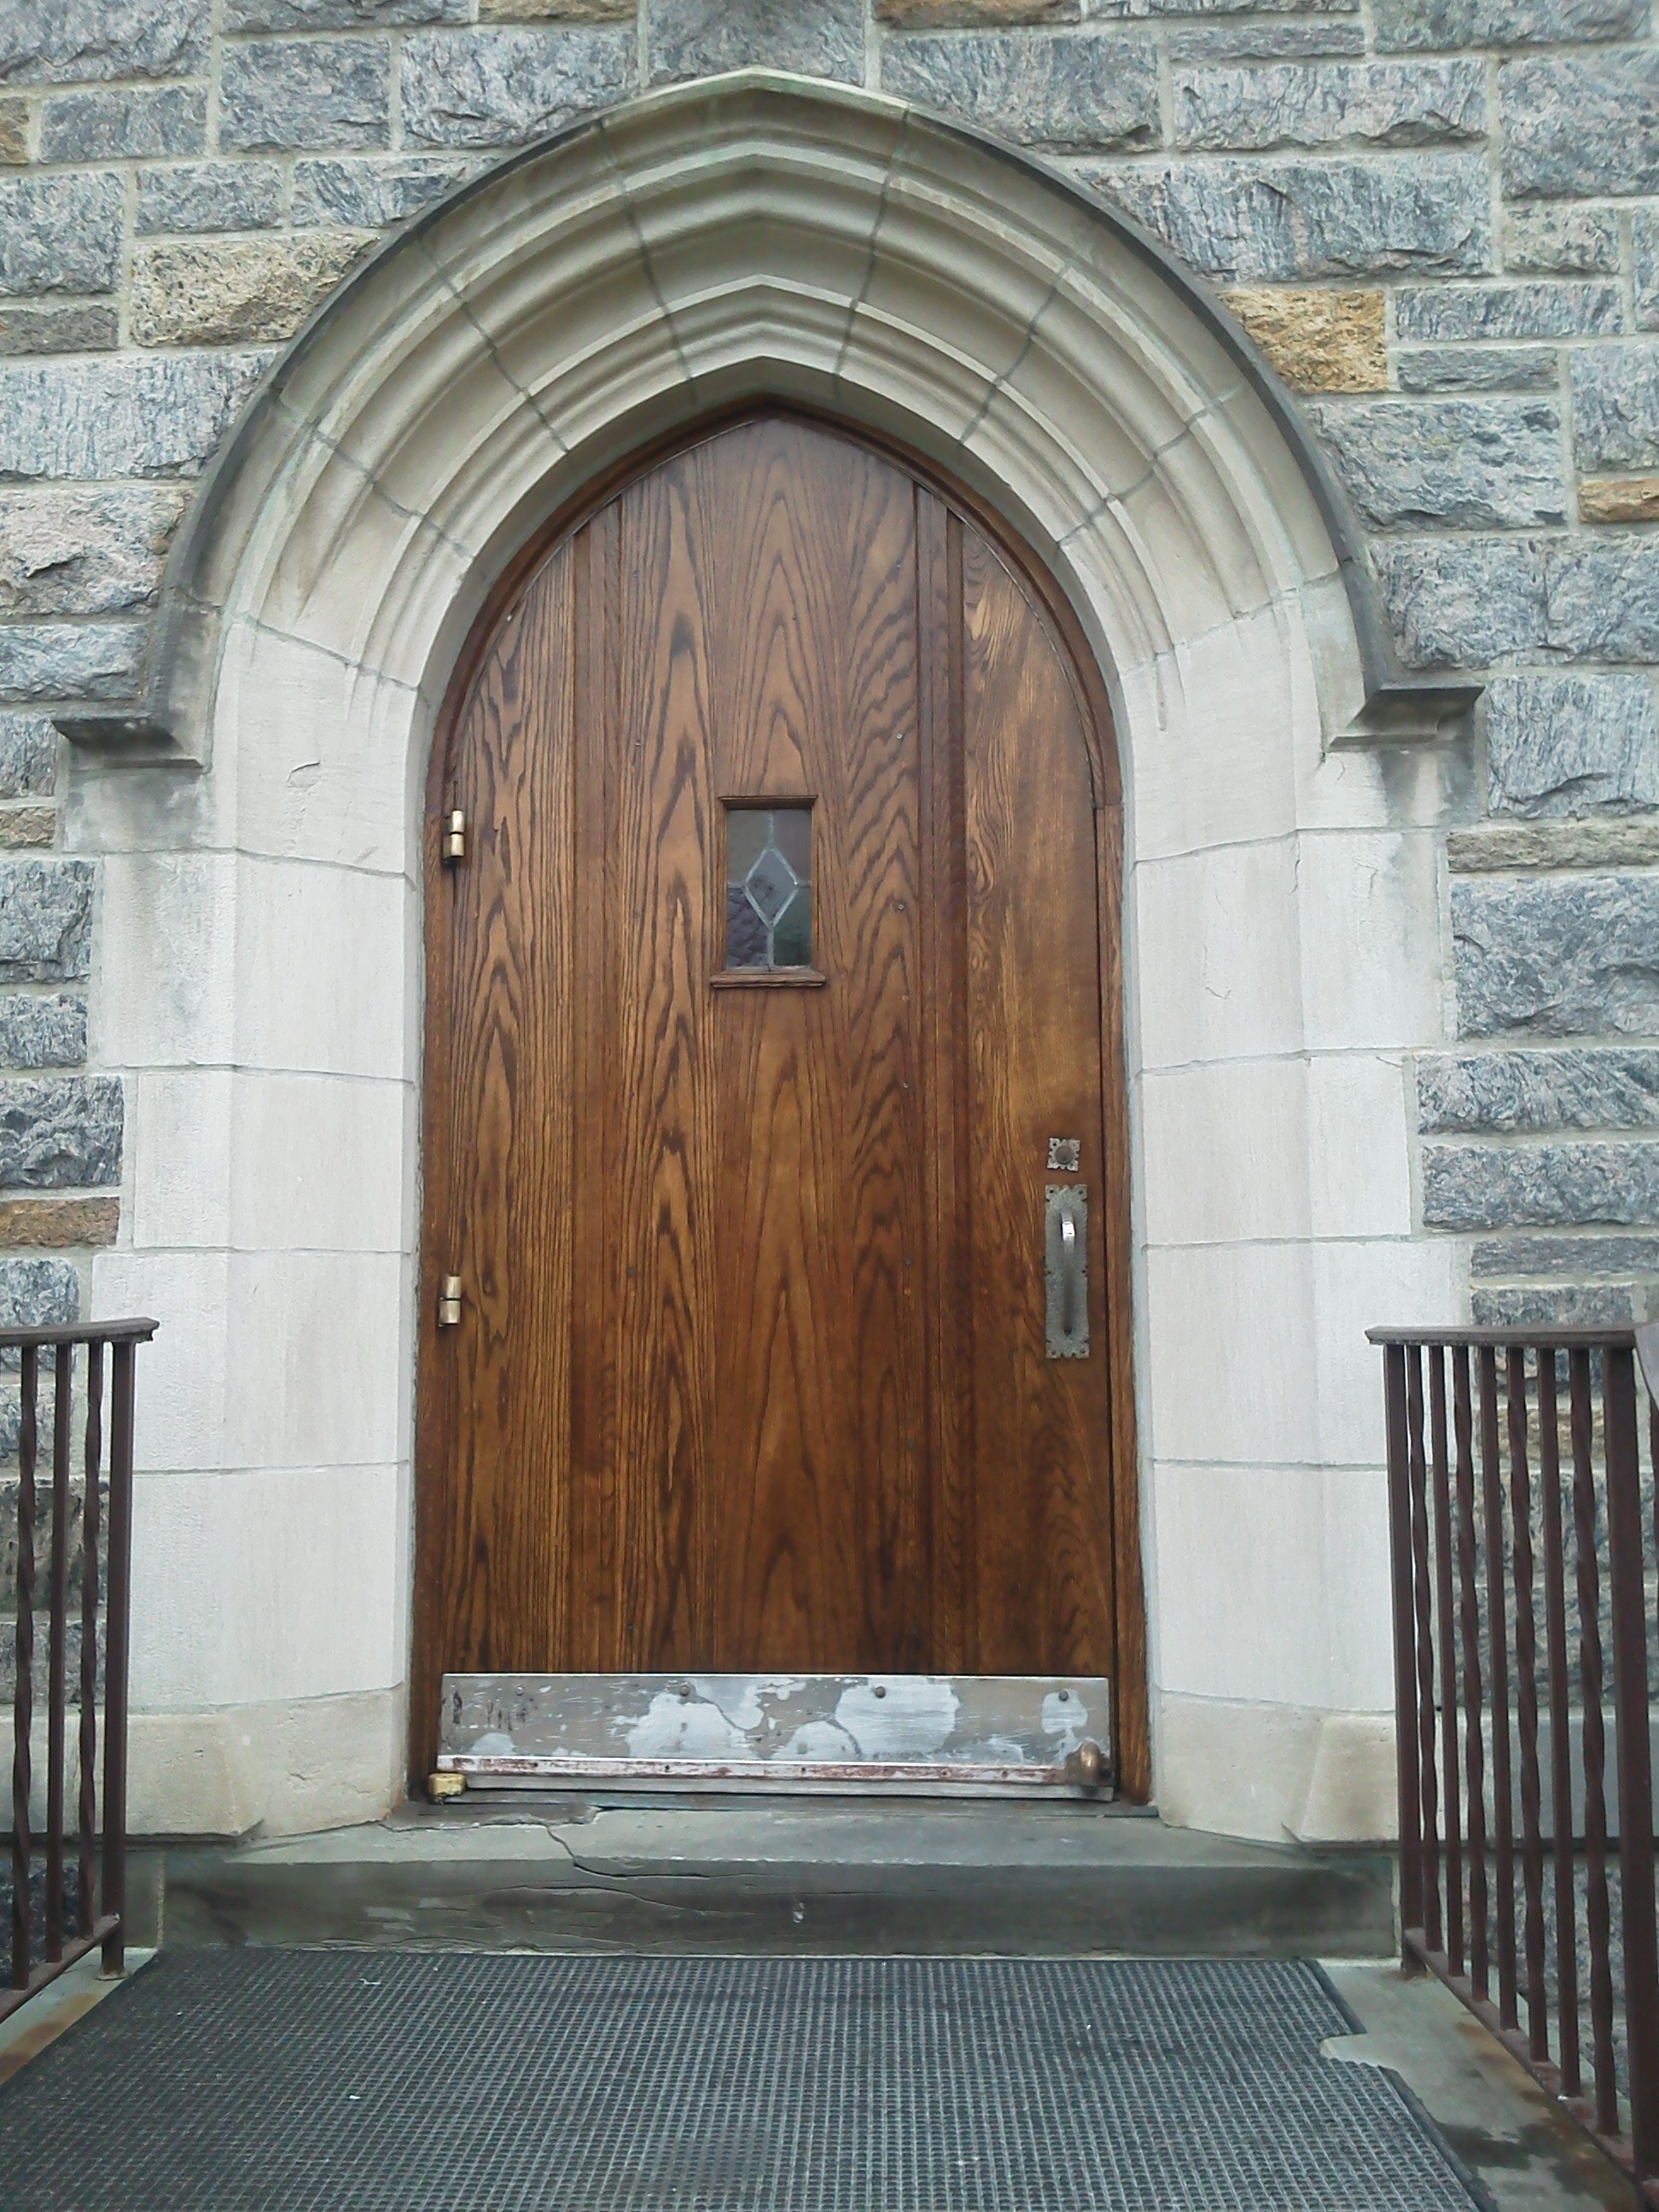 Outside the Church Doors - Deb Palmer